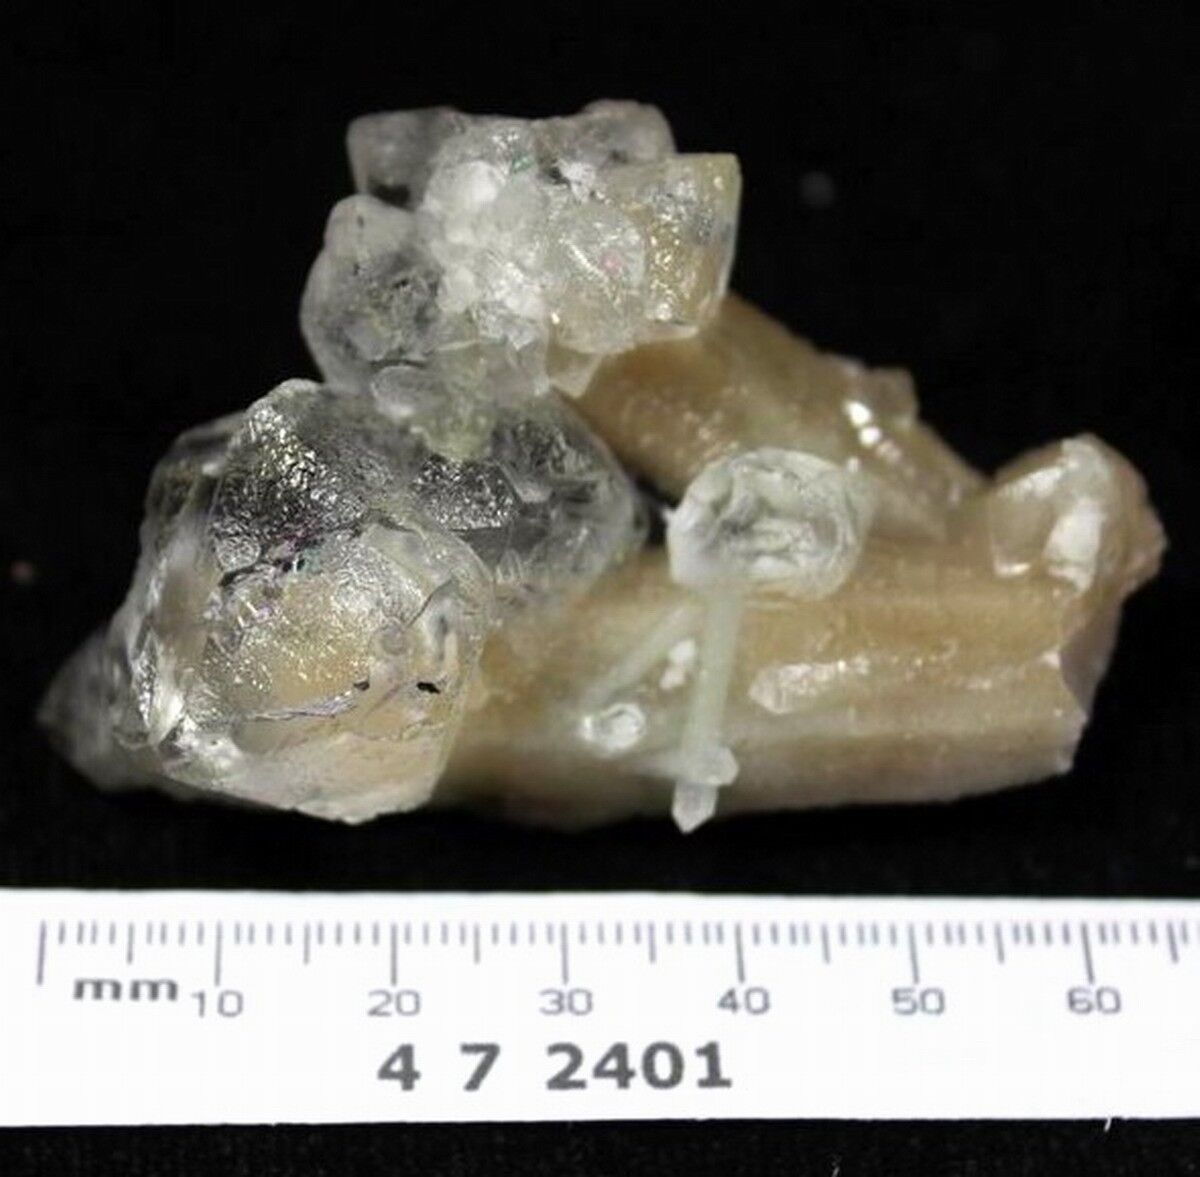 Super clear transparent Fluorite on Skeletal Quartz China CM472401